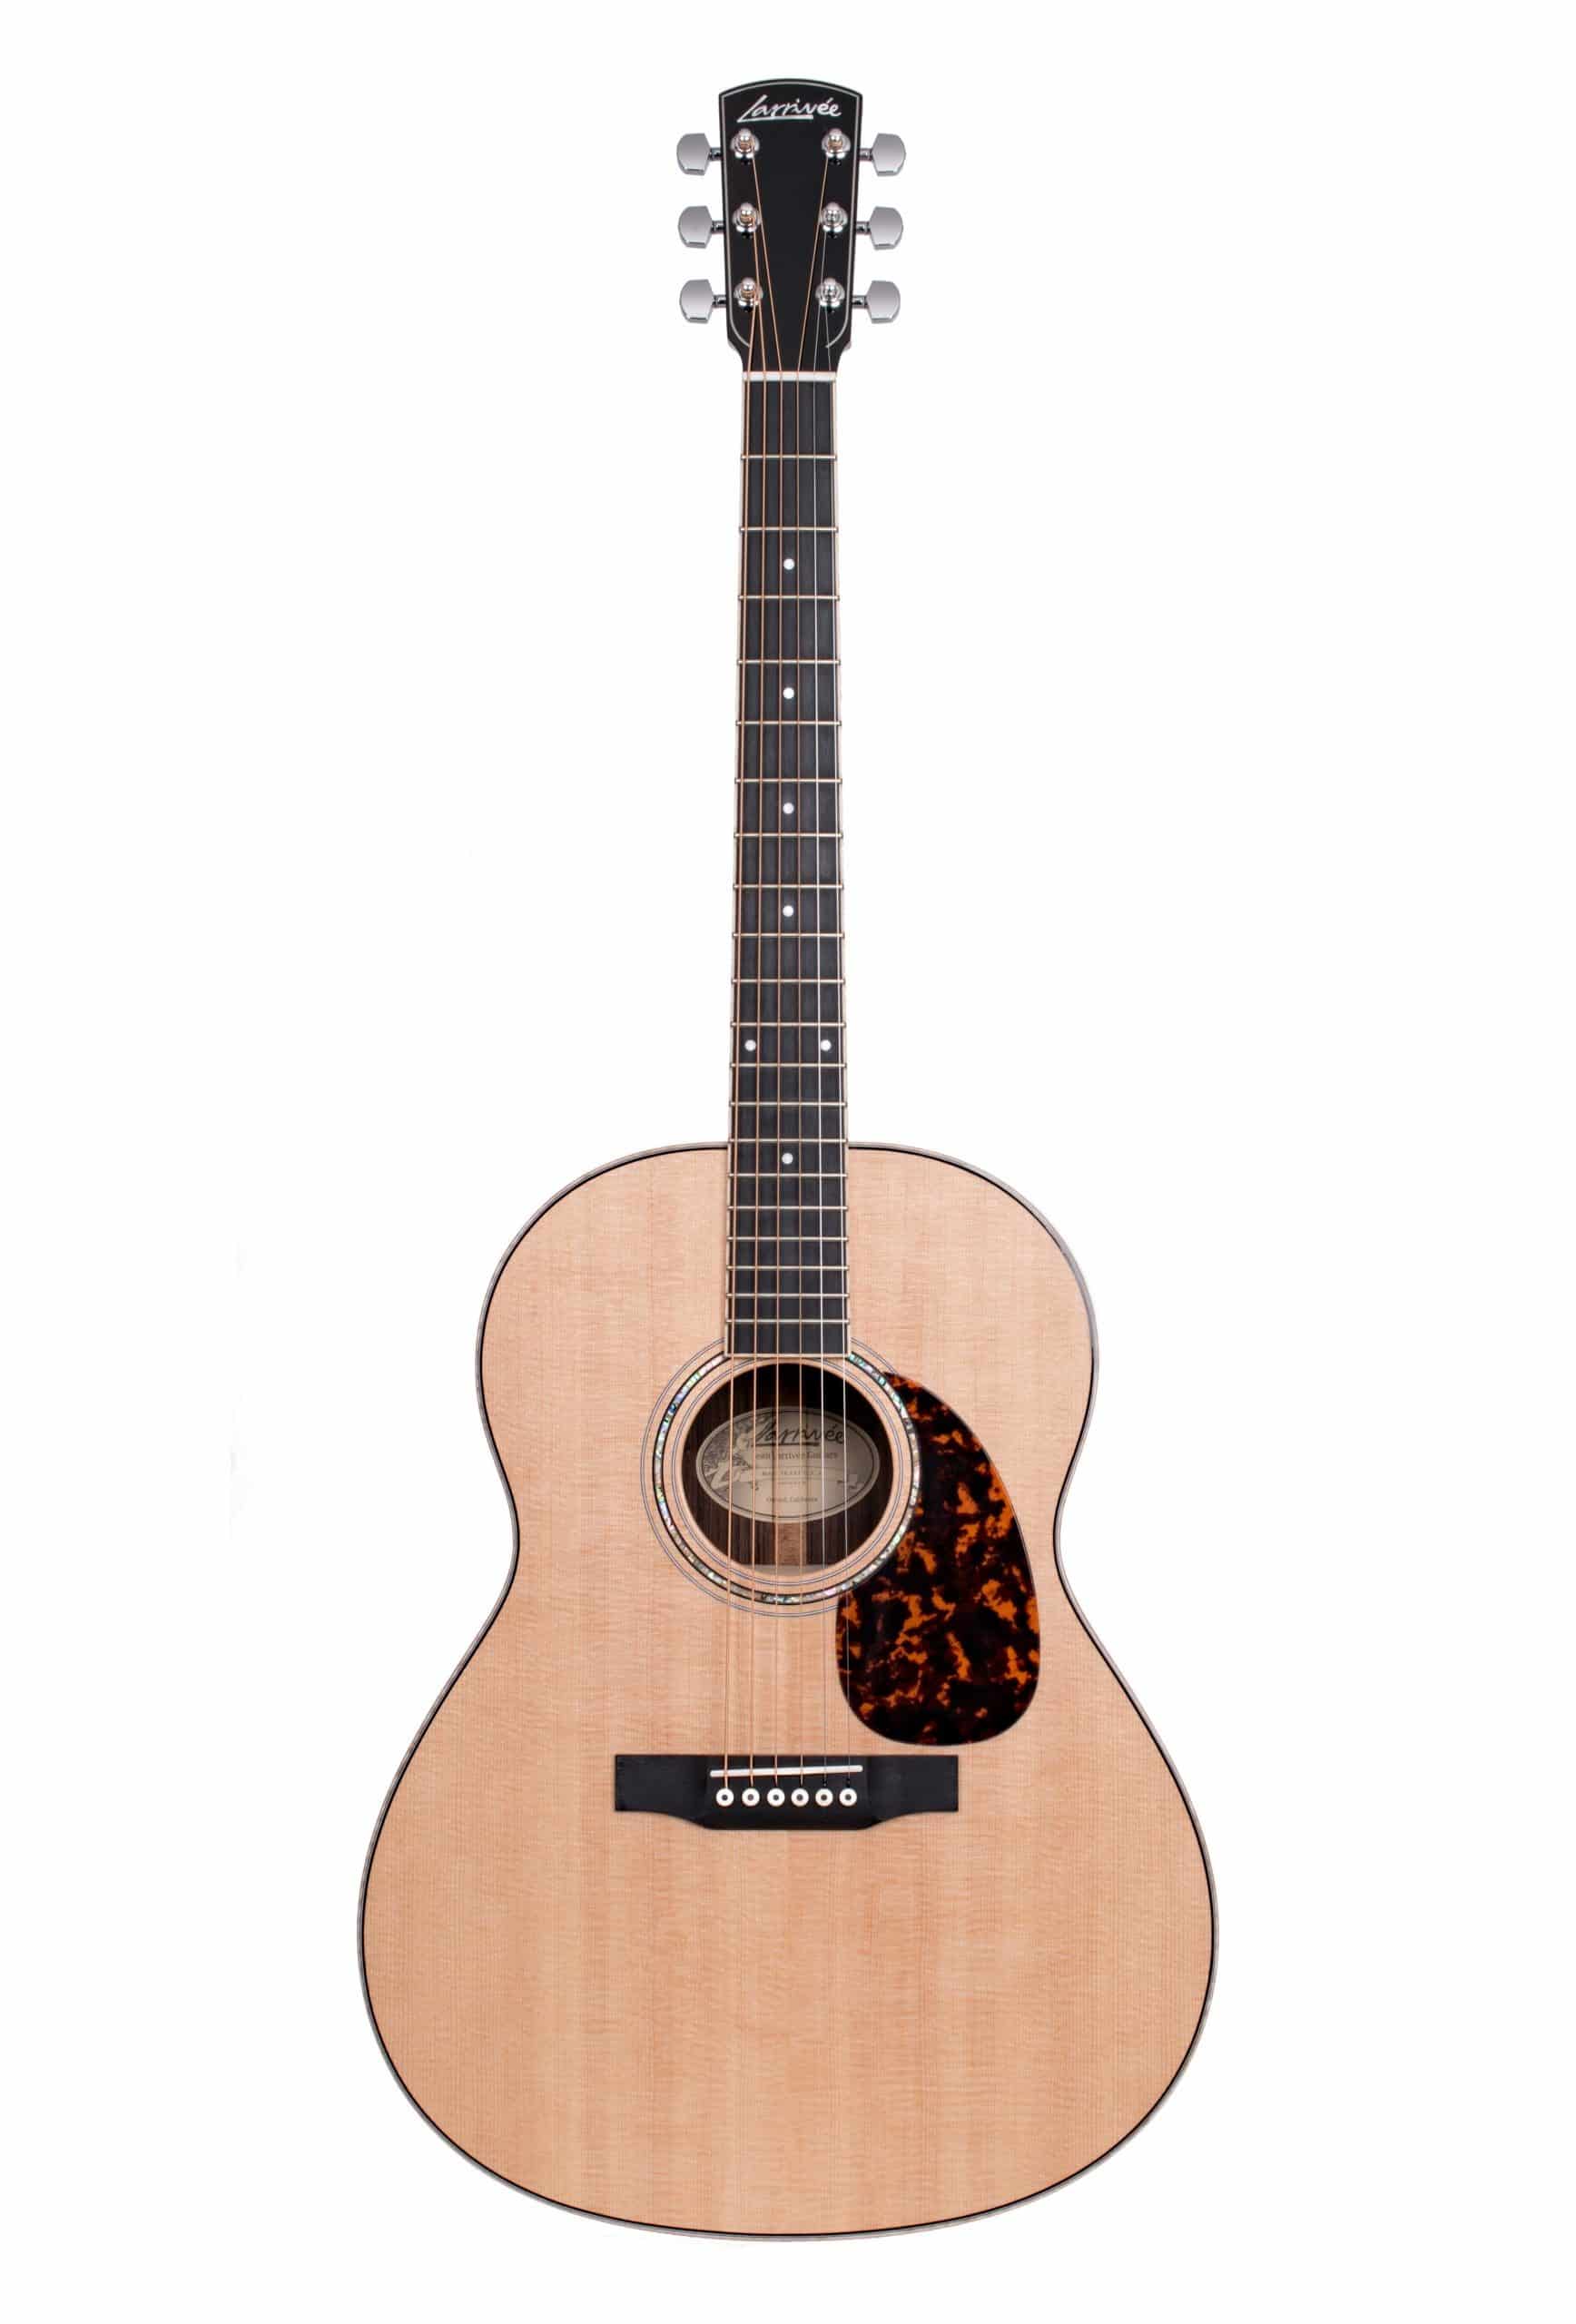 img src="/western-guitar" alt="Larrivée L-09E Rosewood Western Guitar m./Pickup "